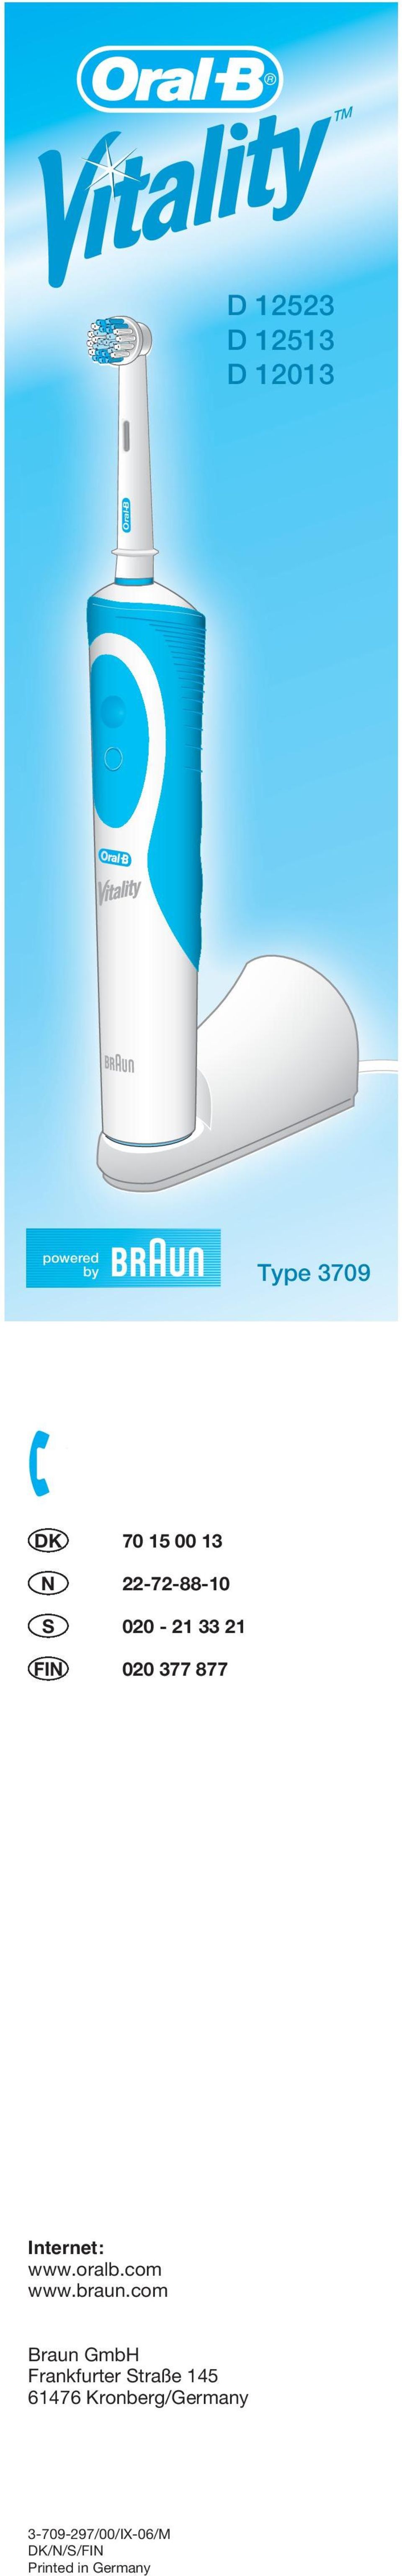 www.oralb.com www.braun.